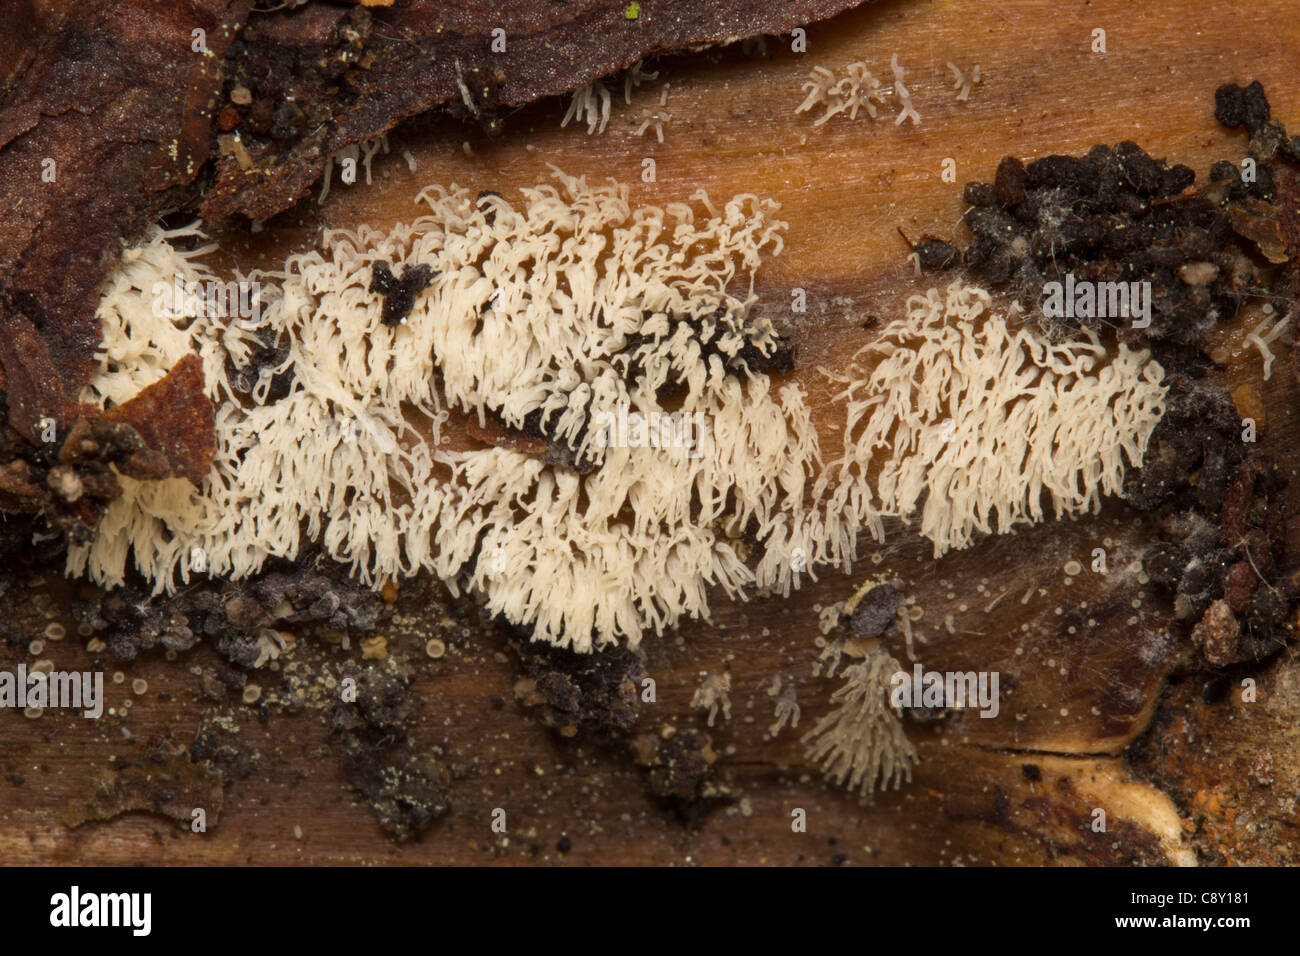 Coral slime (Ceratiomyxa fruticulosa) mushroom Stock Photo